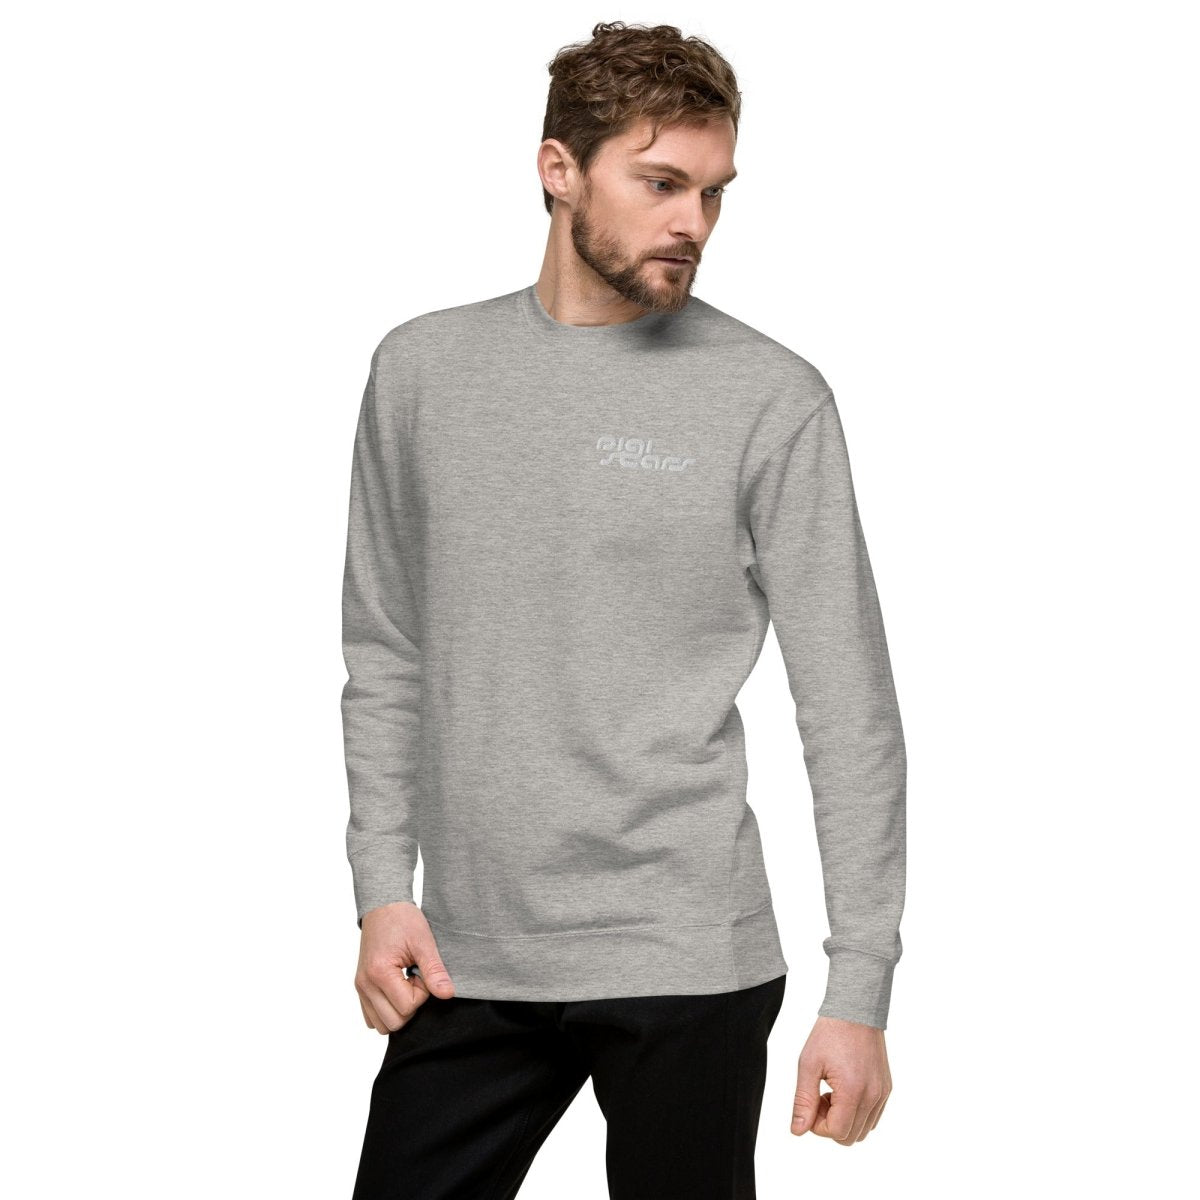 Unisex Premium Sweatshirt - digistars